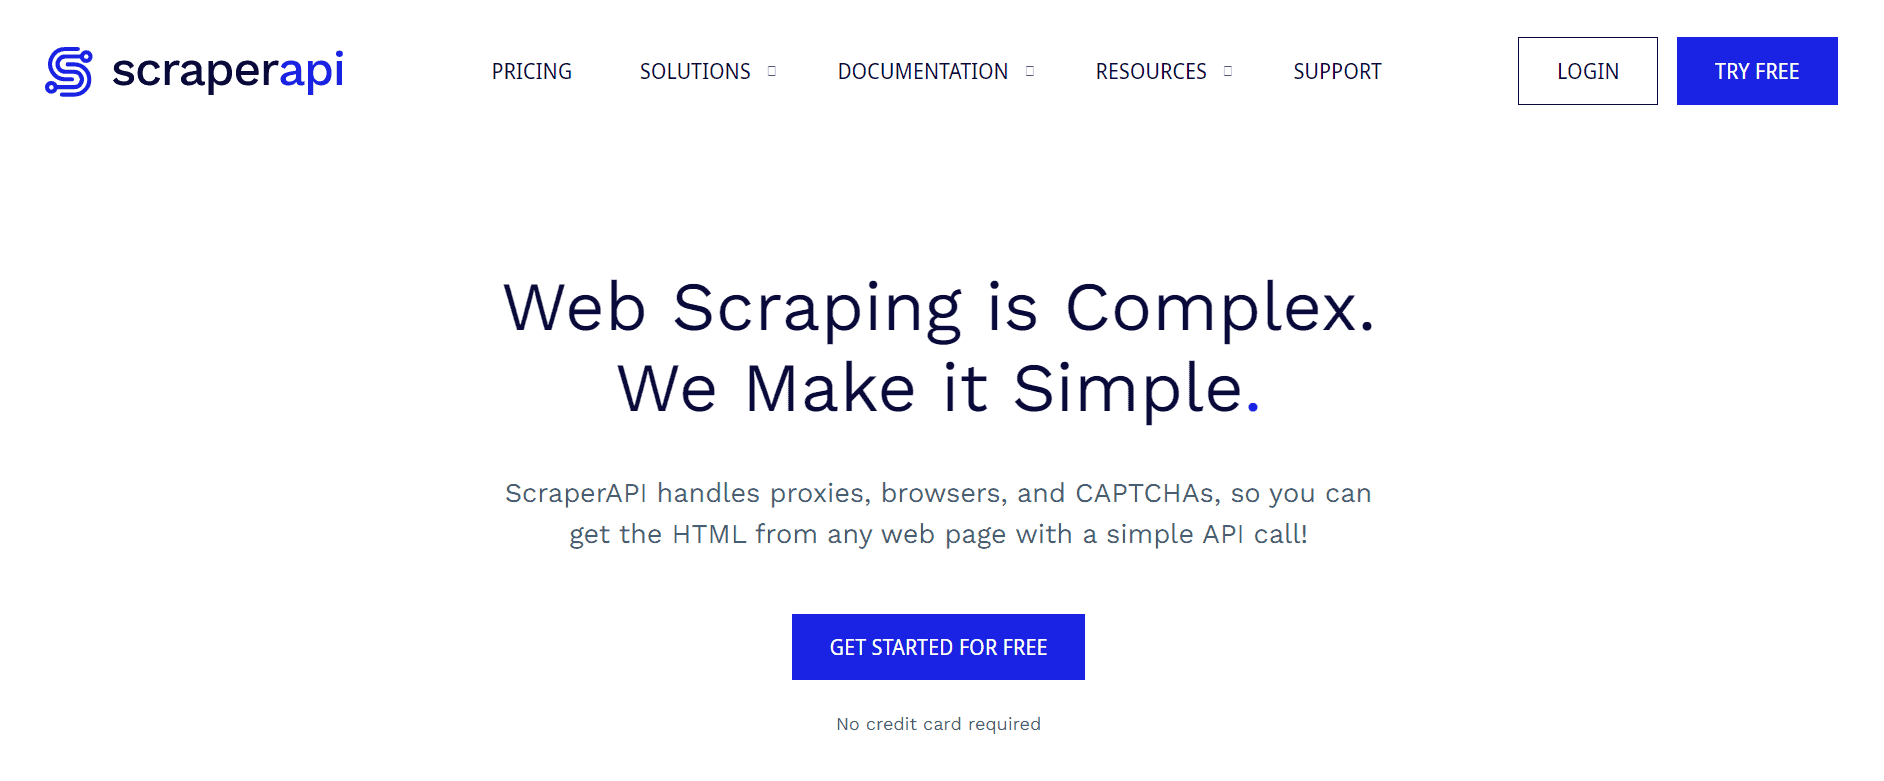 scraperapi homepage